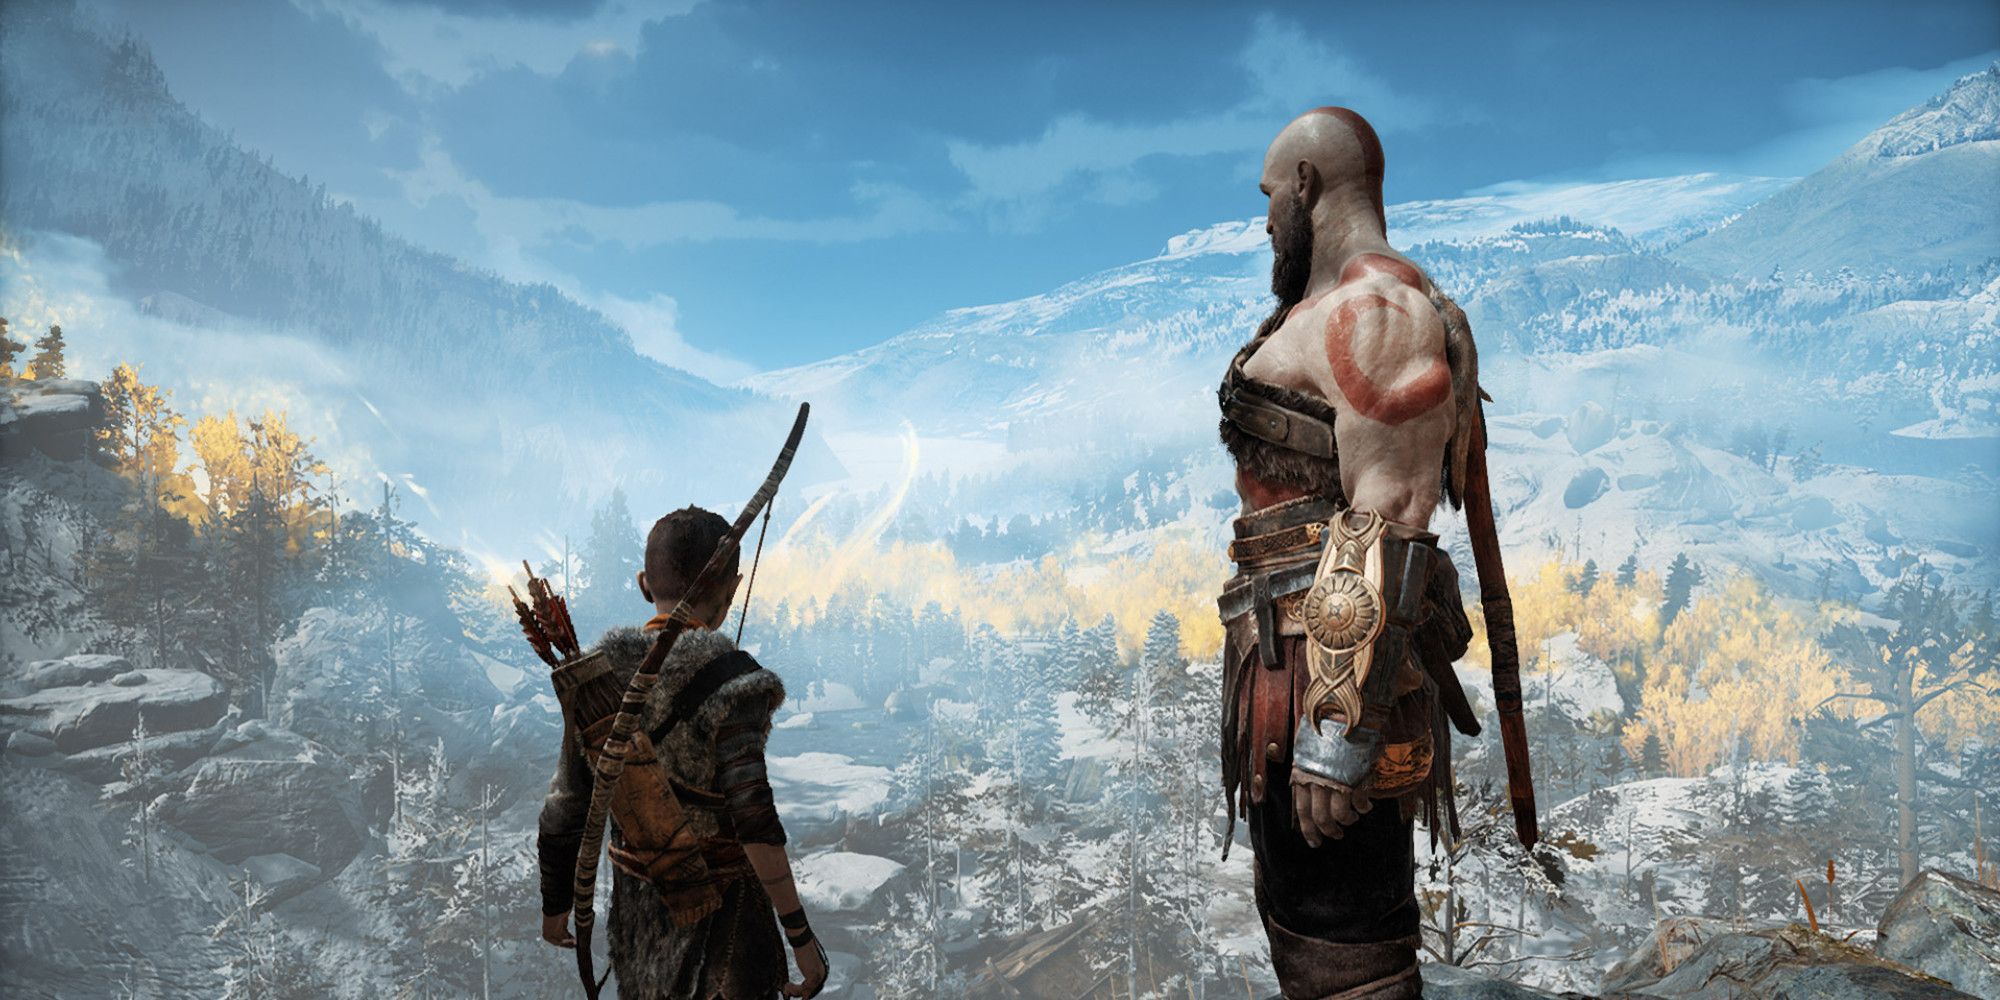 Kratos and Atreus look over a snowy landsacpe